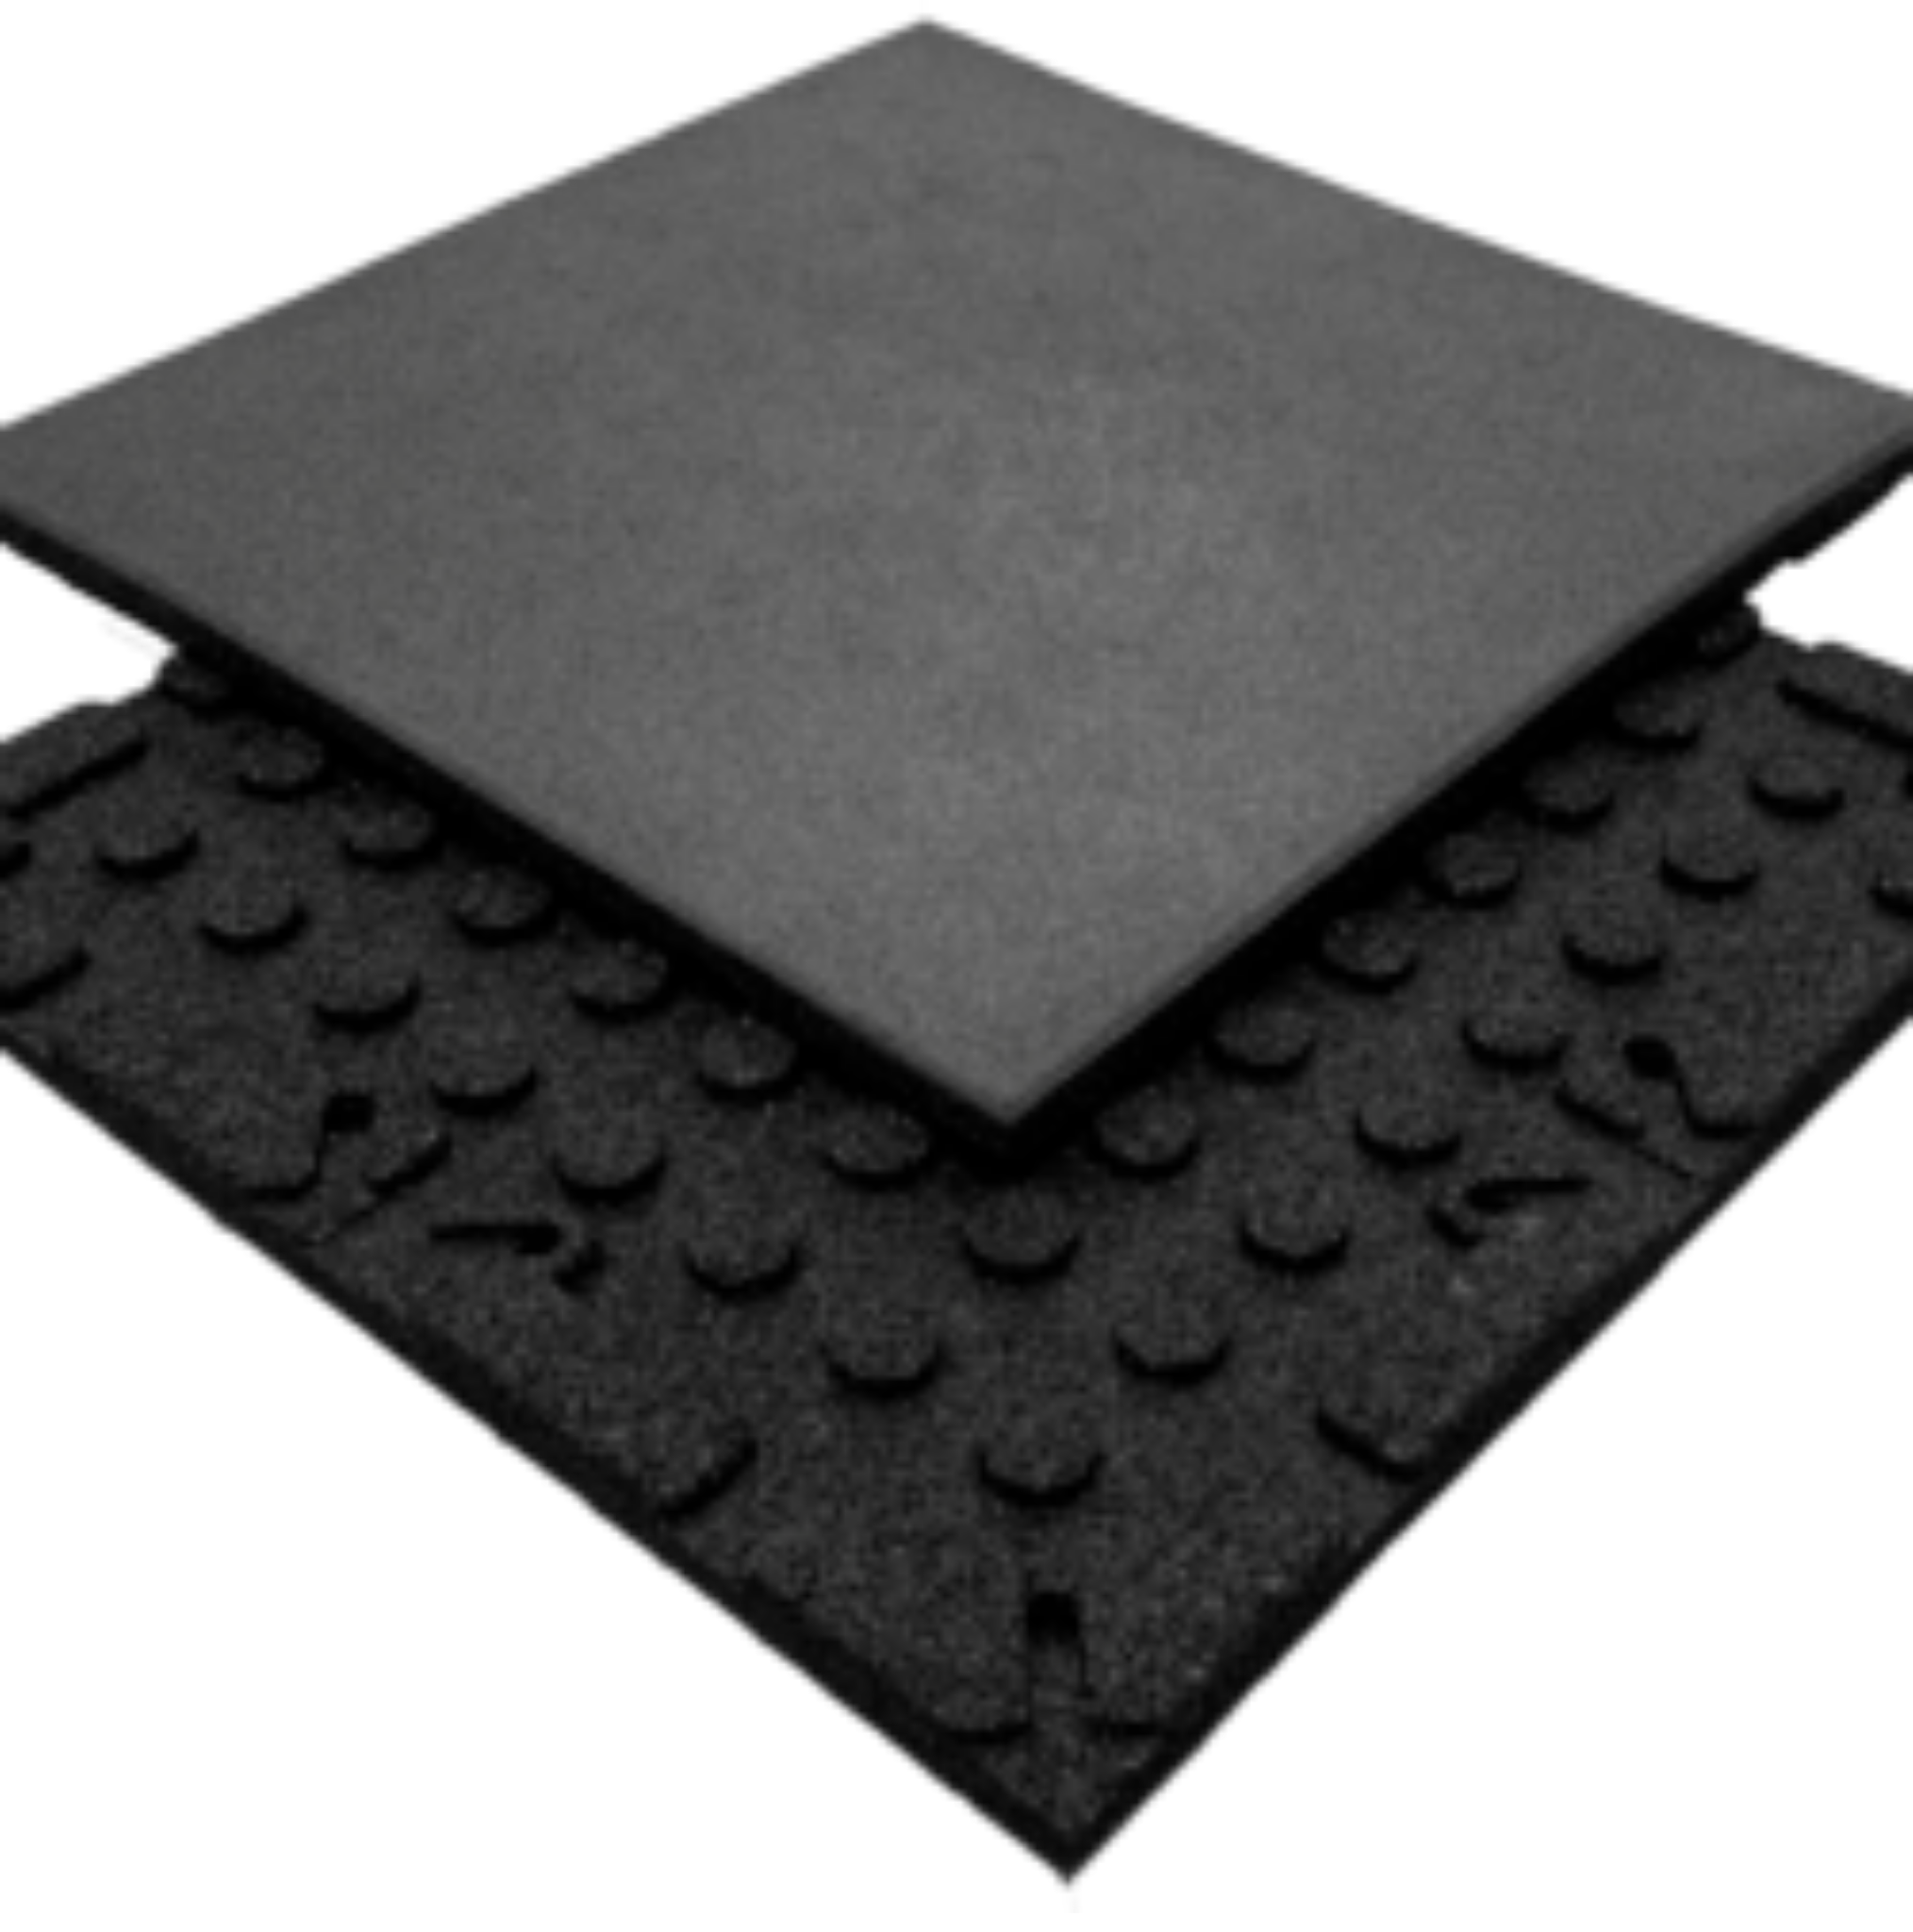 GatorSHOCK® – High Performance Tiles 2' x 2' / Thickness 30mm $25 Per Tile